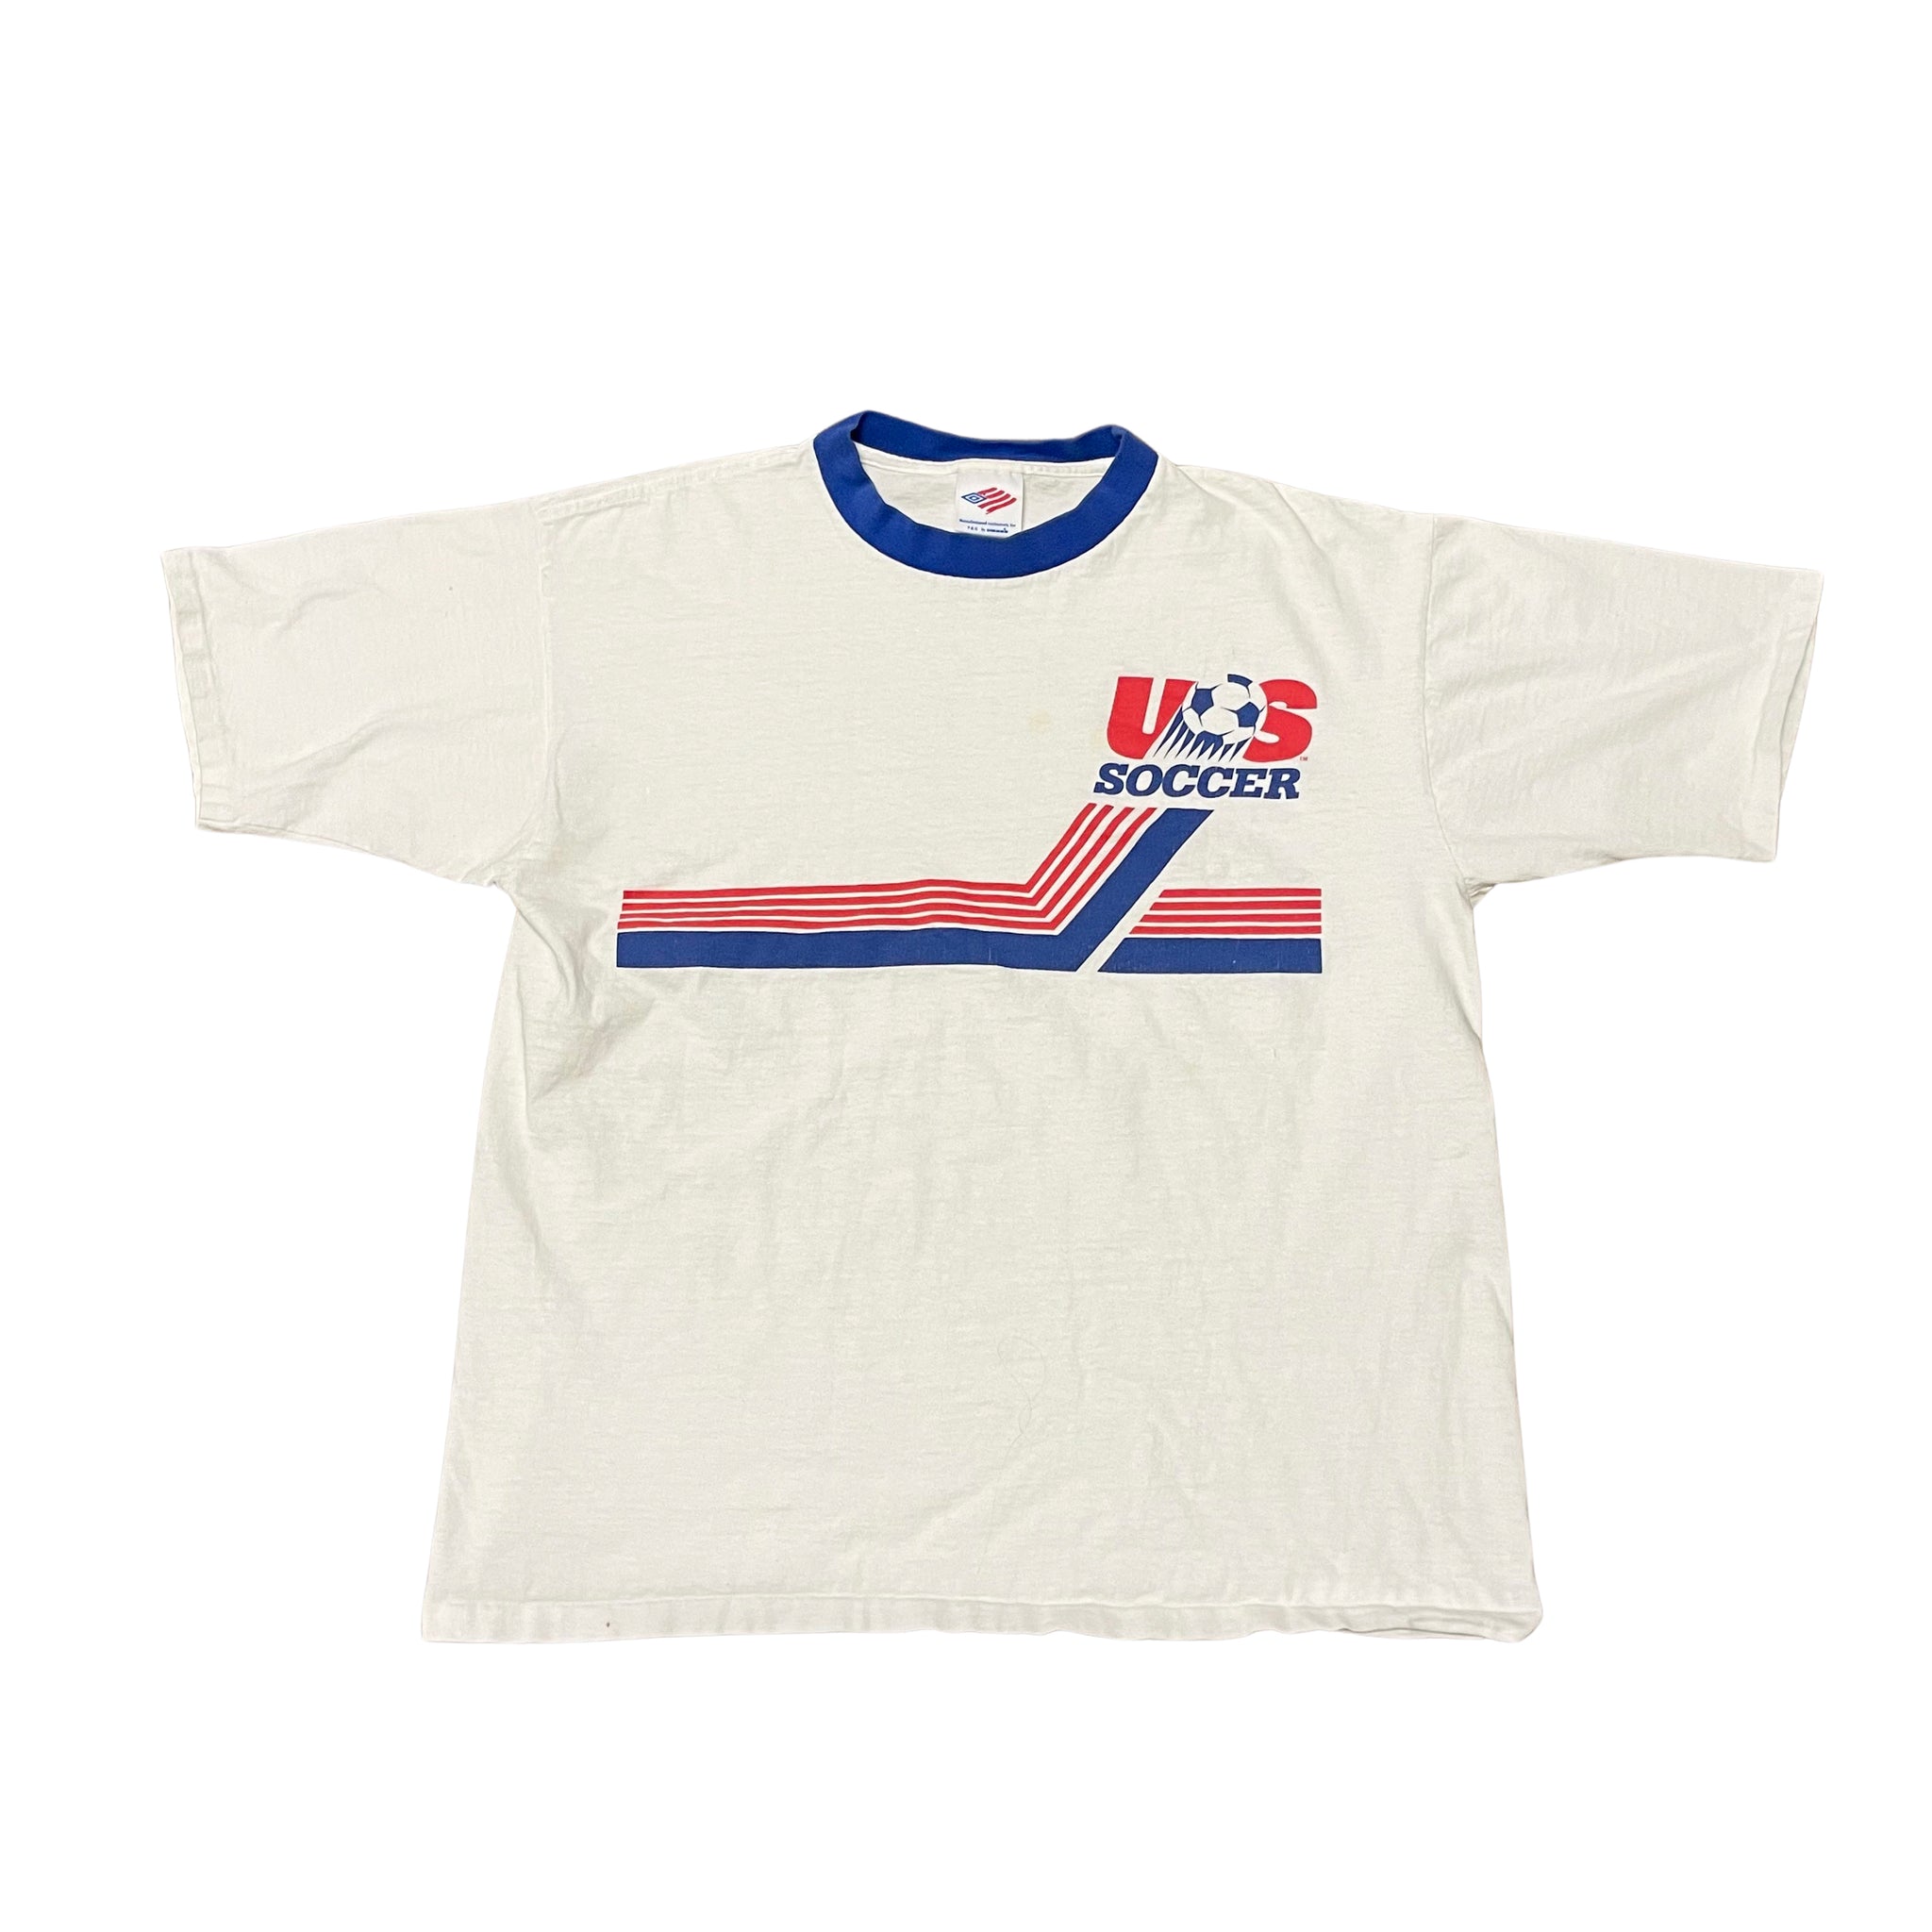 Umbro US Soccer Shirt - XL